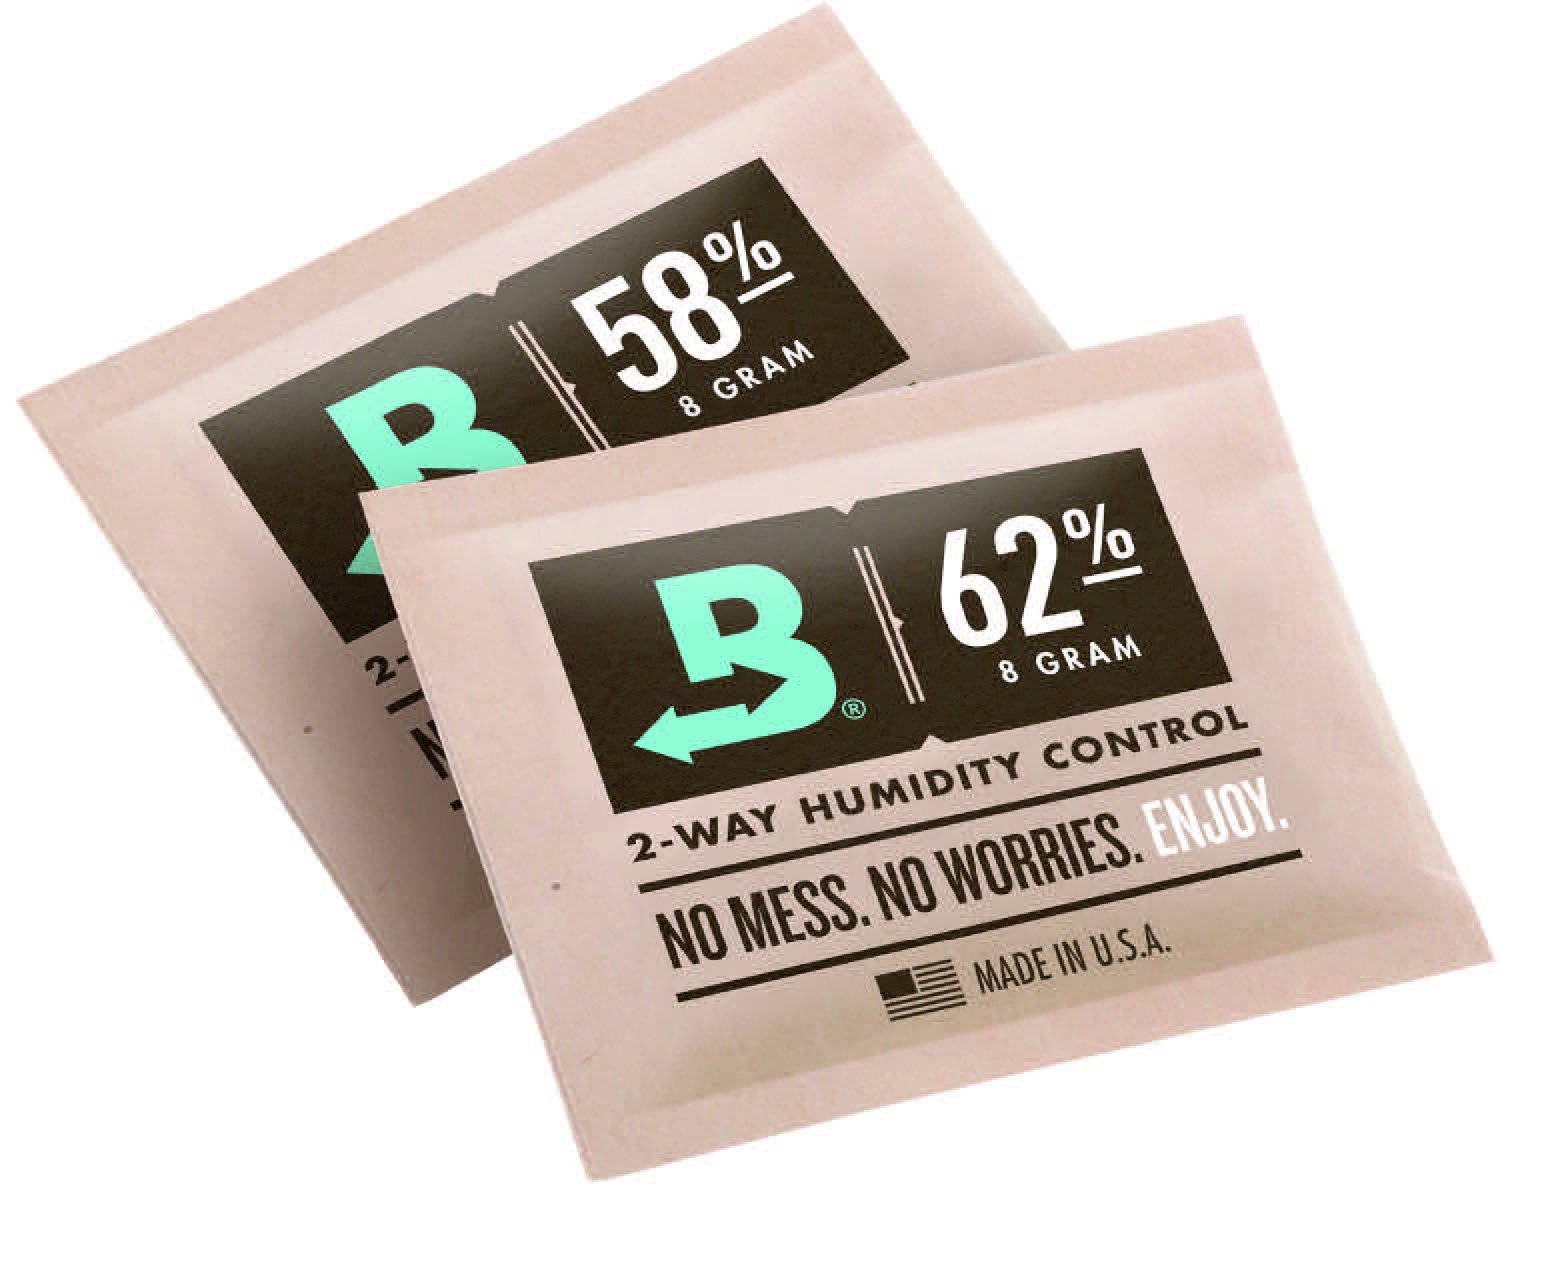 Boveda 2-Way Humidity Control - 8gram 58%